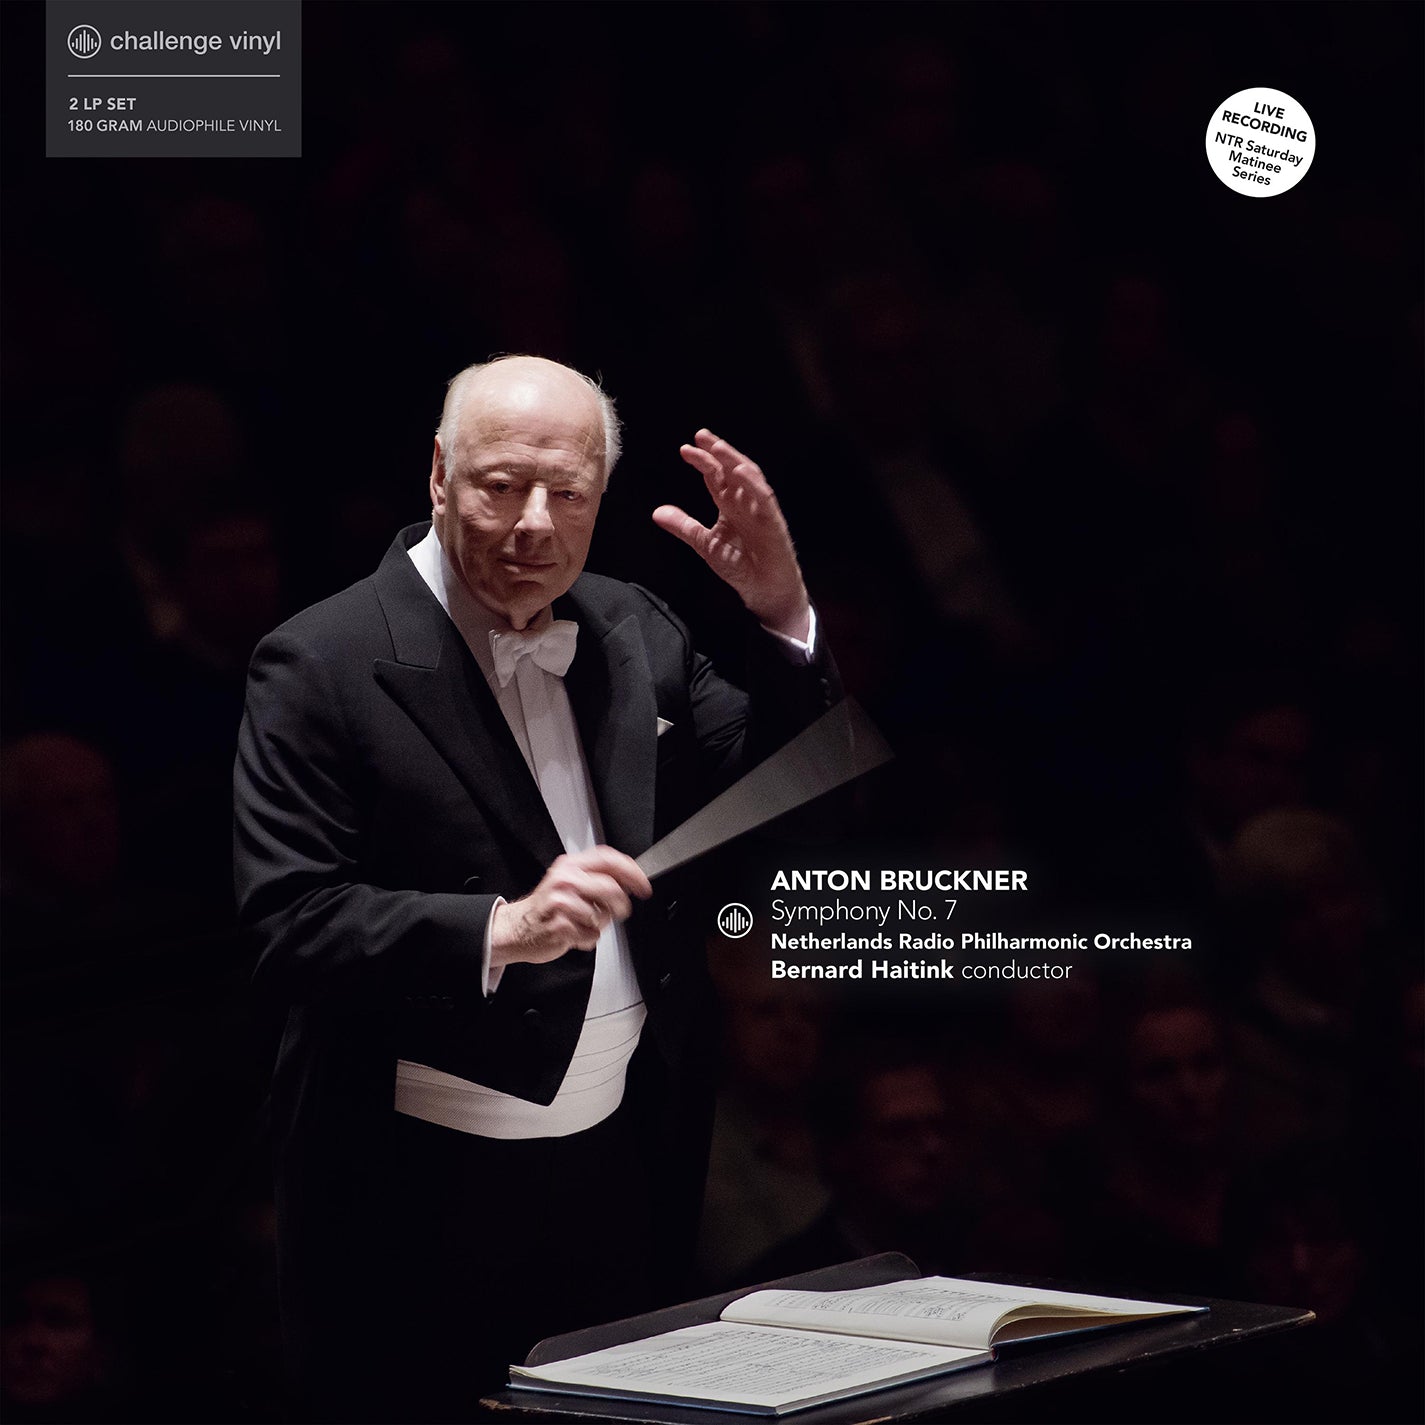 Bruckner: Symphony no. 7 on Vinyl / Haitink, Netherlands Radio Philharmonic